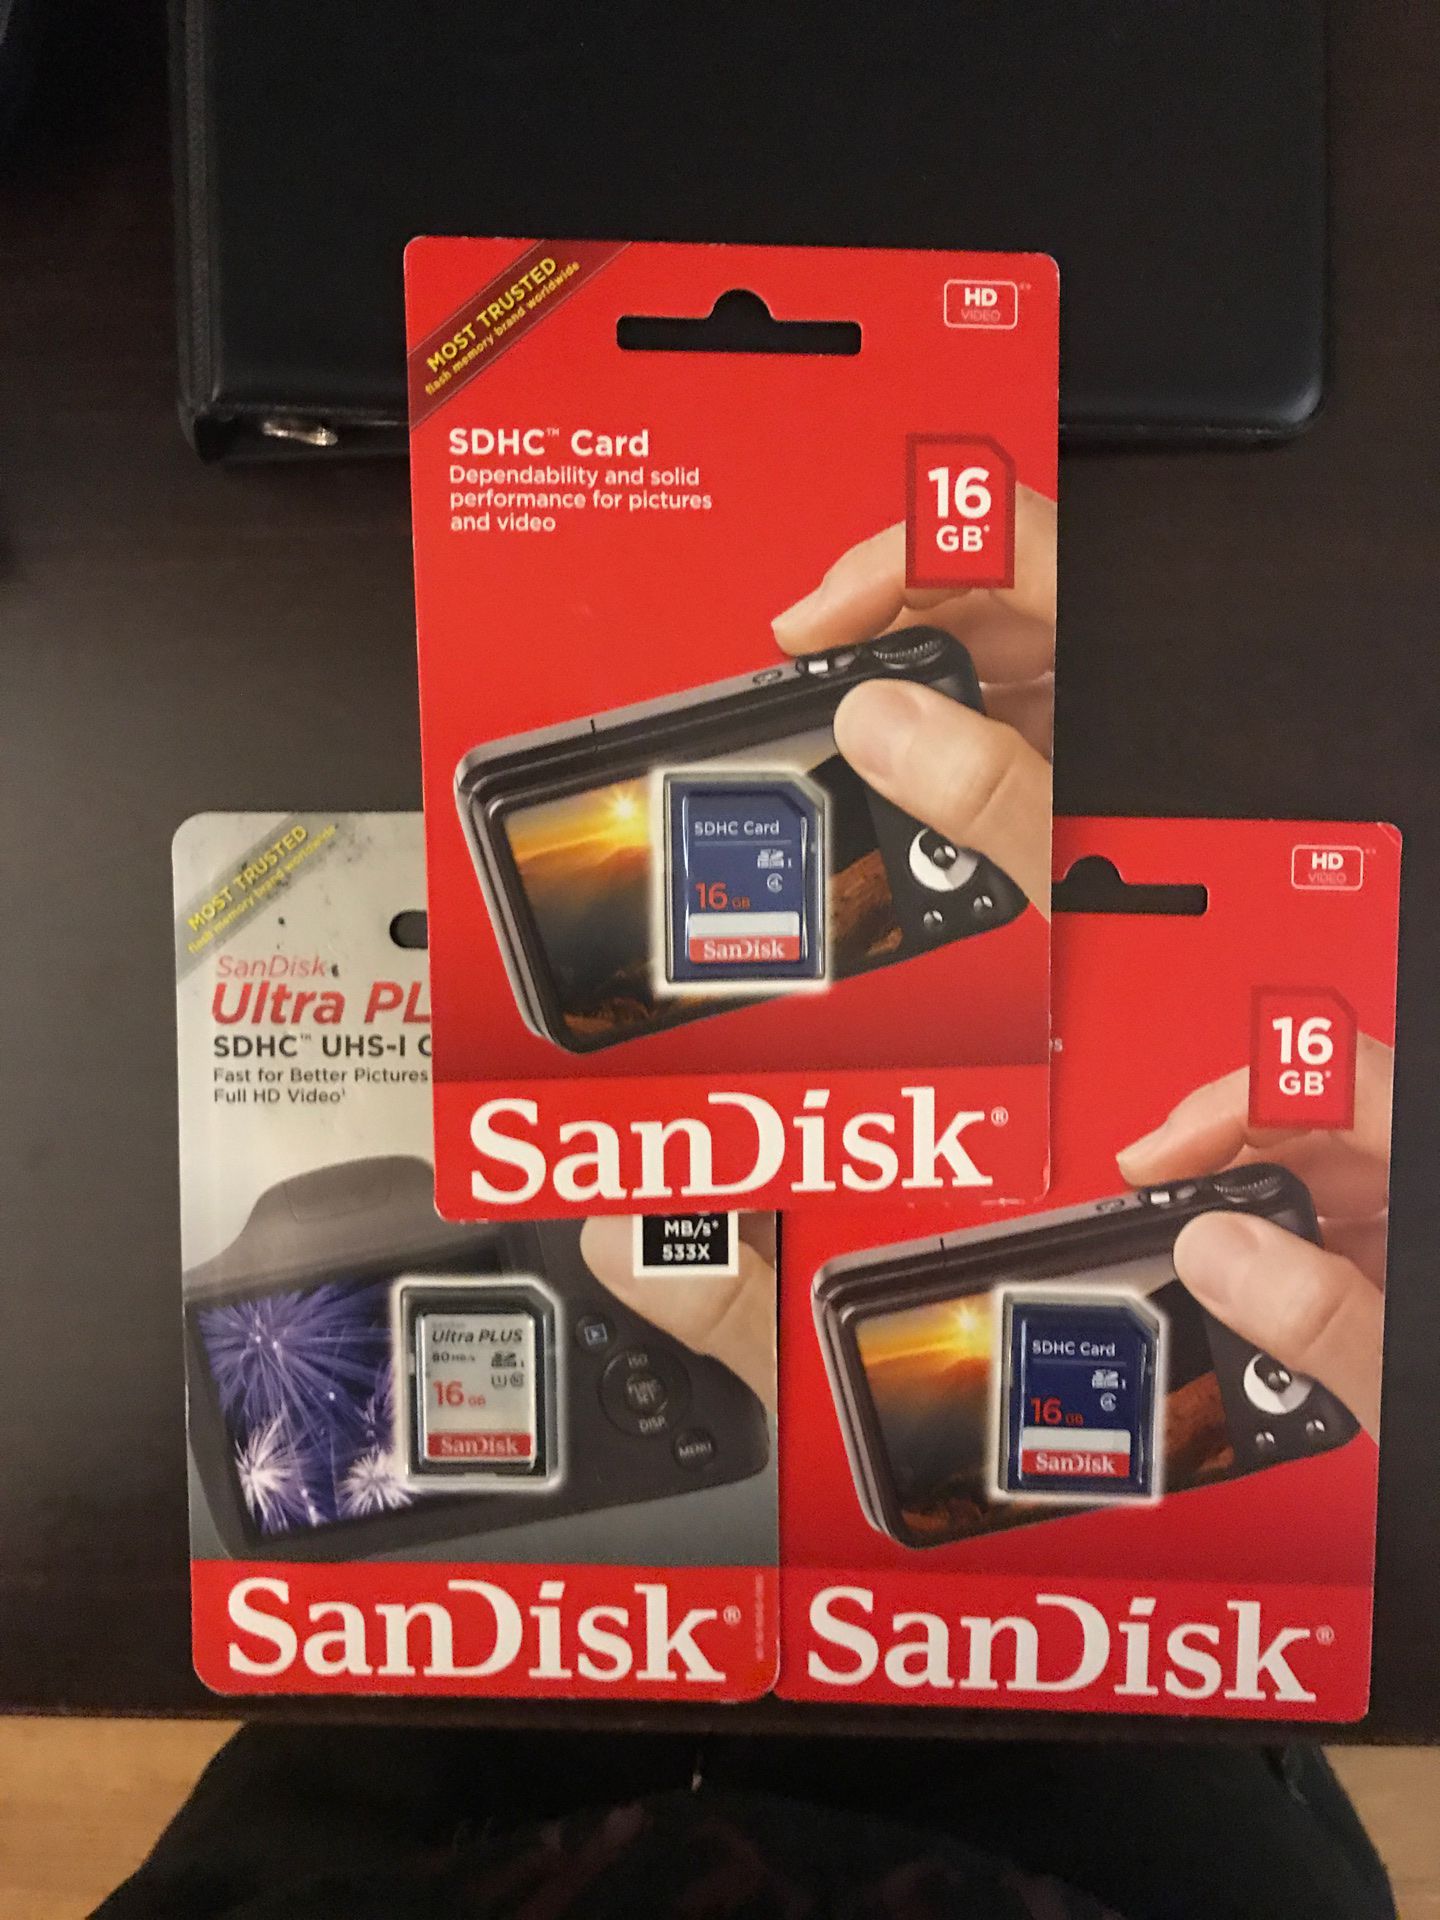 X3 SanDisk 16GB SD/memory cards